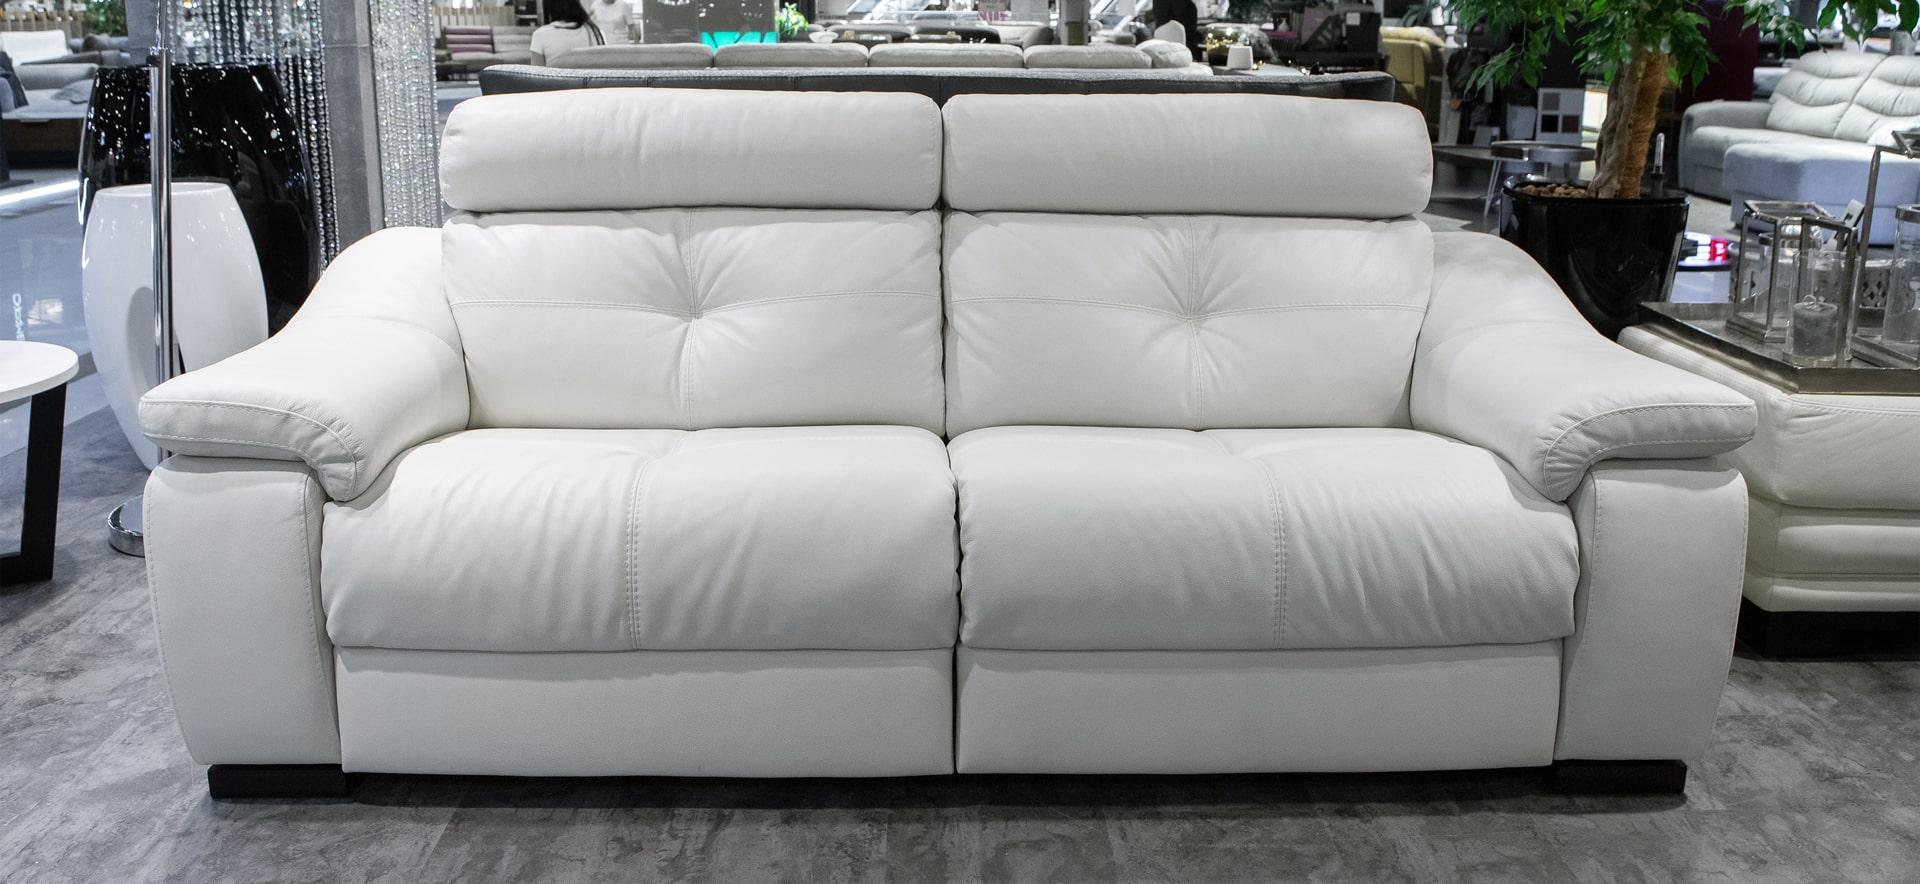  Кожаный диван  c  реклайнерами Martin   Relotti